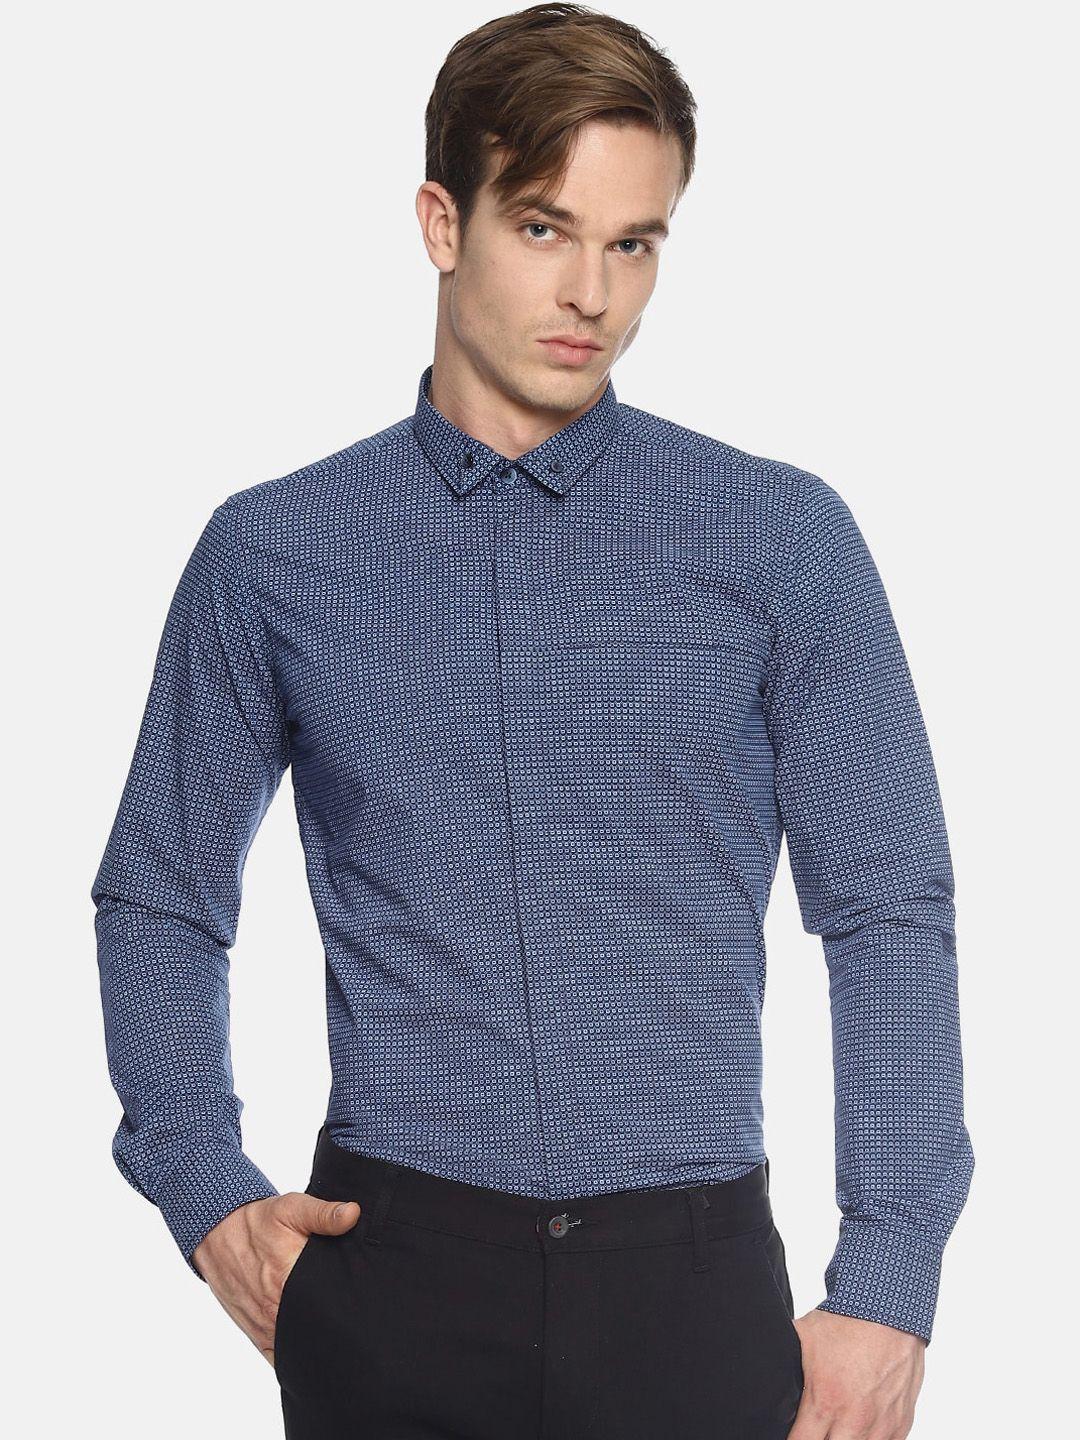 couper-&-coll-men-blue-slim-fit-printed-cotton-casual-shirt